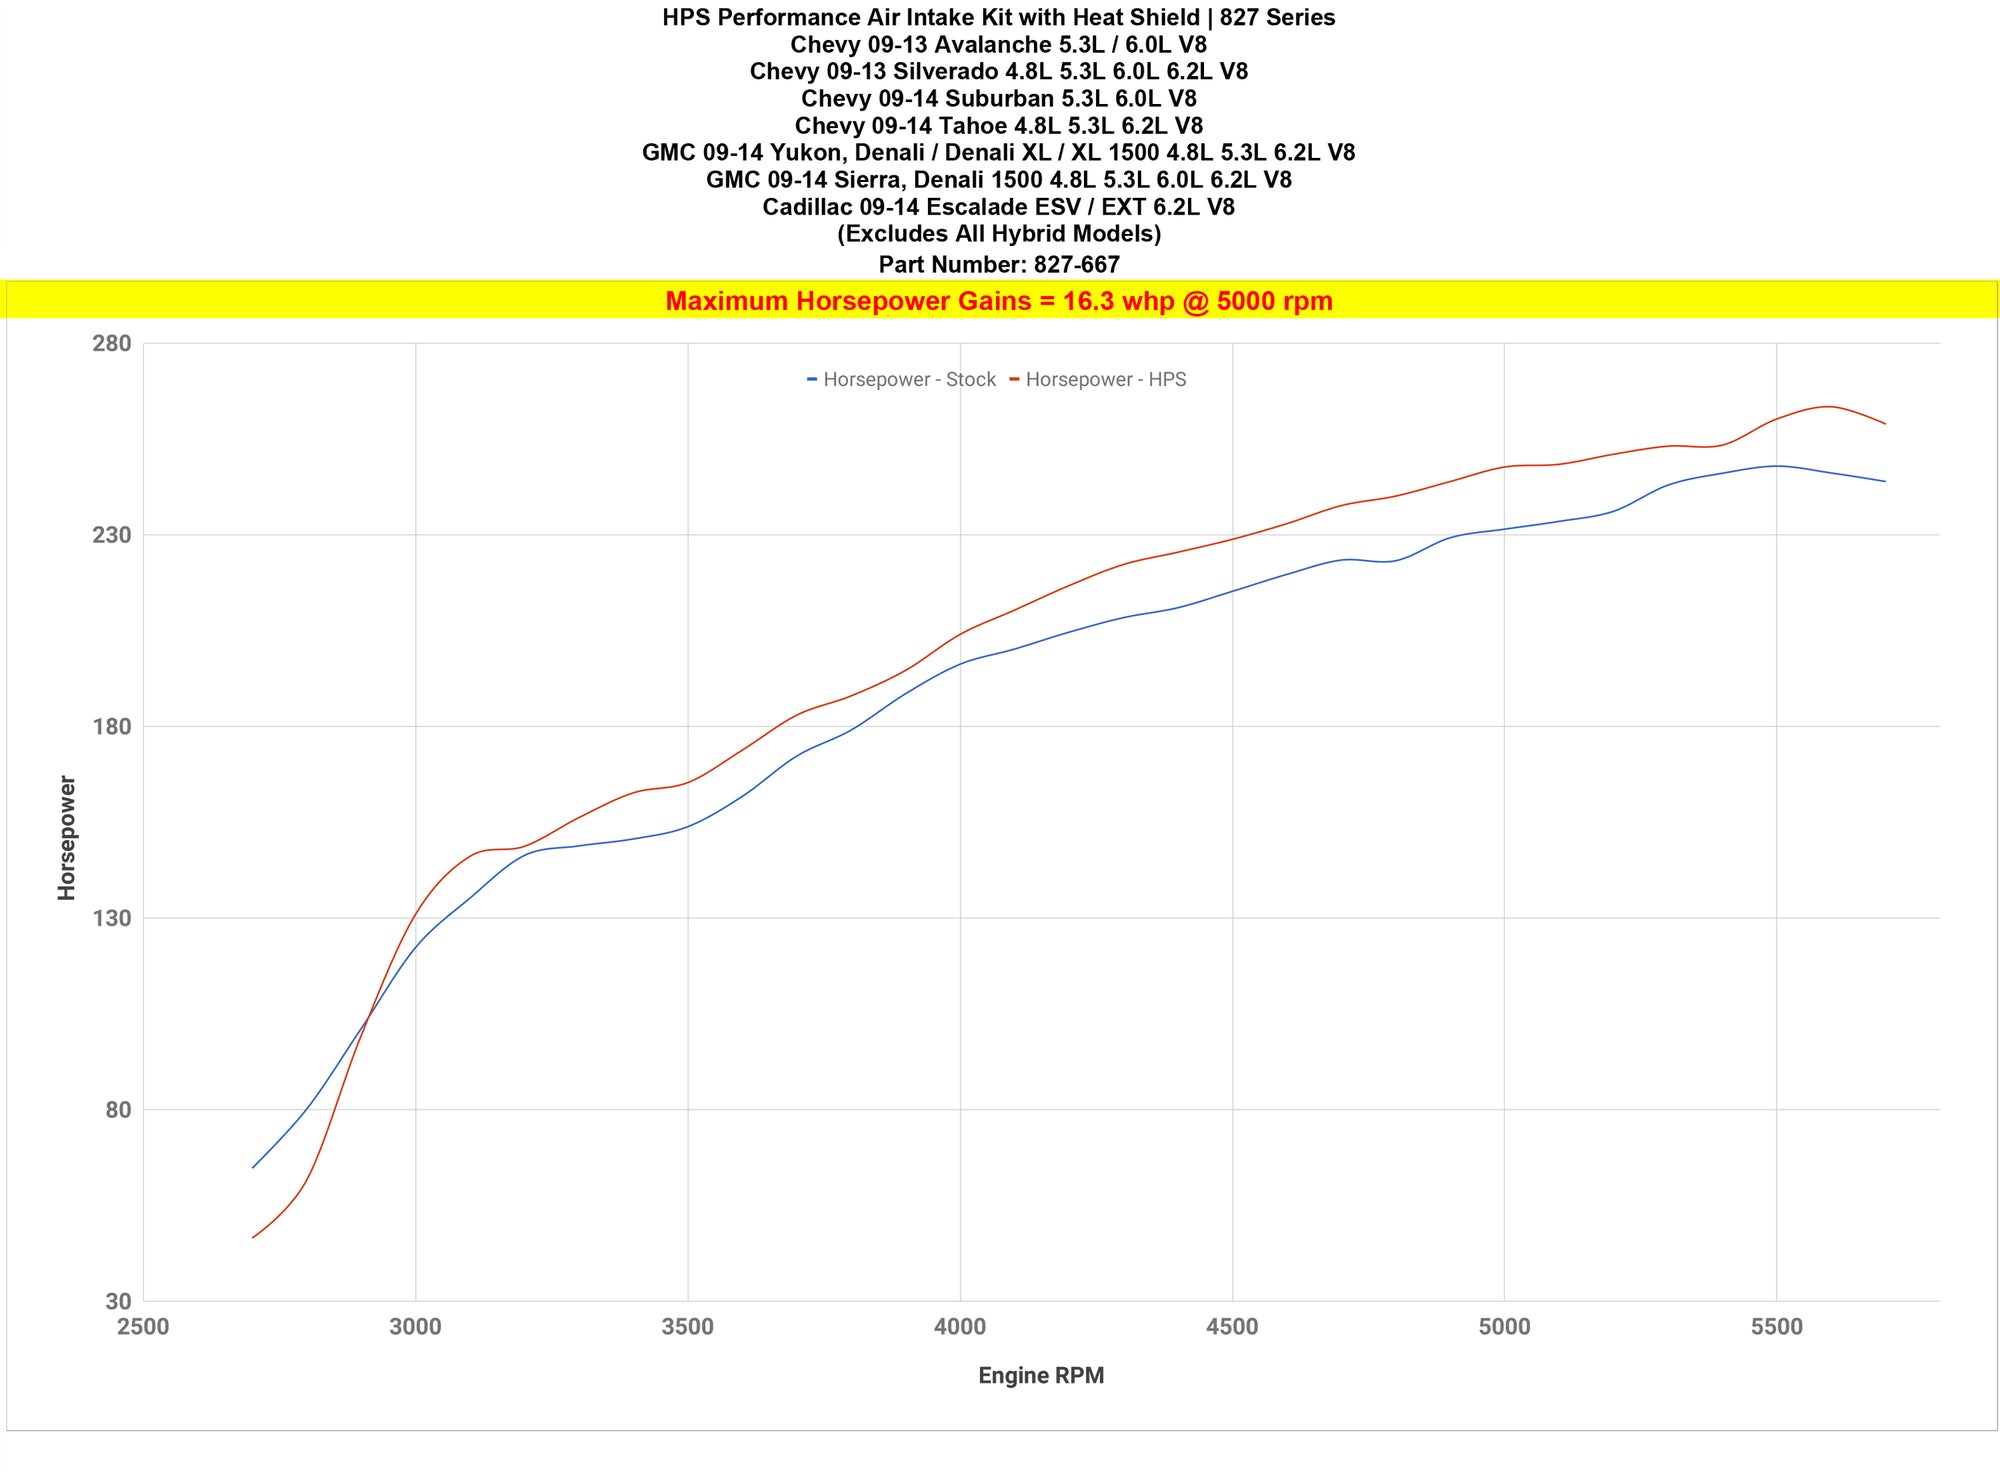 Dyno proven gains 16.3 whp HPS Performance Shortram Air Intake Kit 2009-2014 GMC Sierra 1500 4.8L 5.3L 6.0L 6.2L V8 (Excludes Hybrid) 827-667P